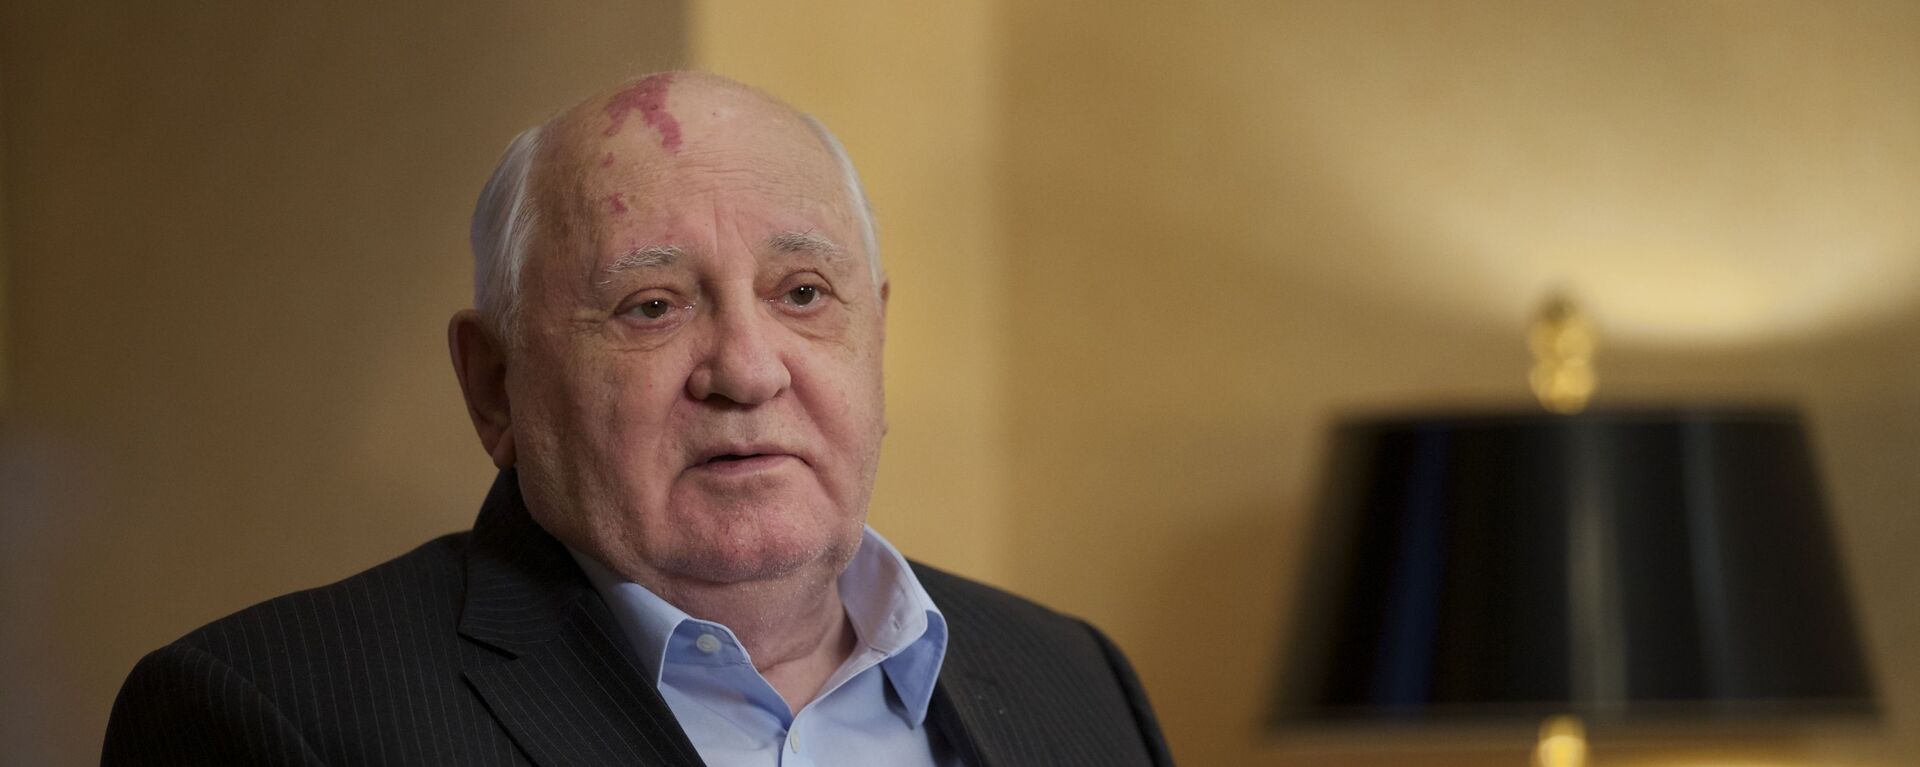 Mijaíl Gorbachov, expresidente de la URSS - Sputnik Mundo, 1920, 25.05.2021